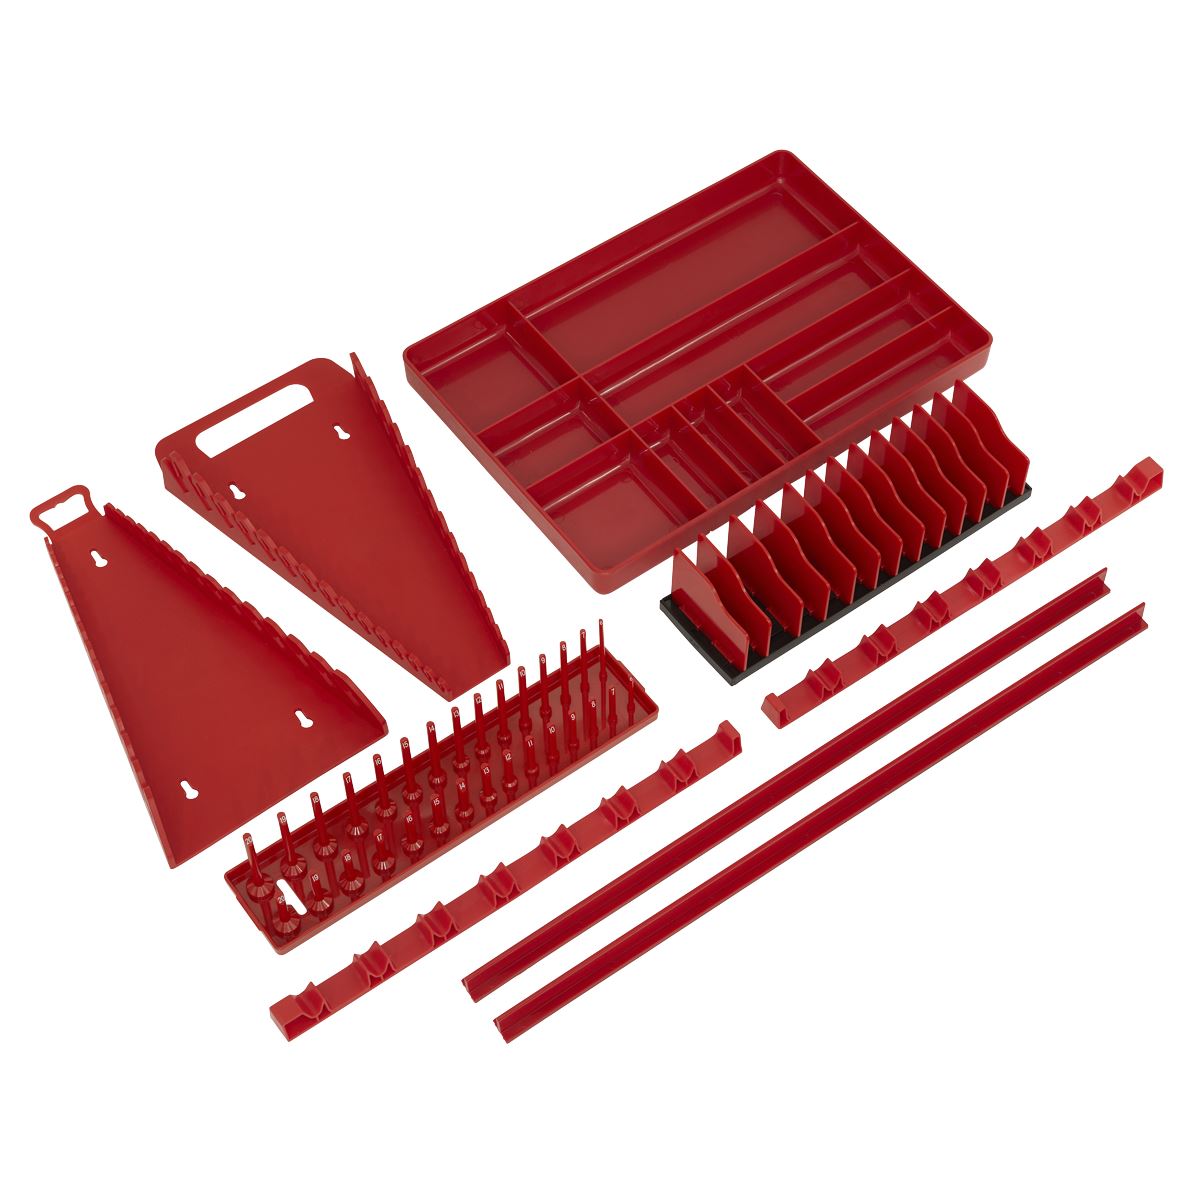 Sealey Premier Tool Storage Organizer Set 9pc